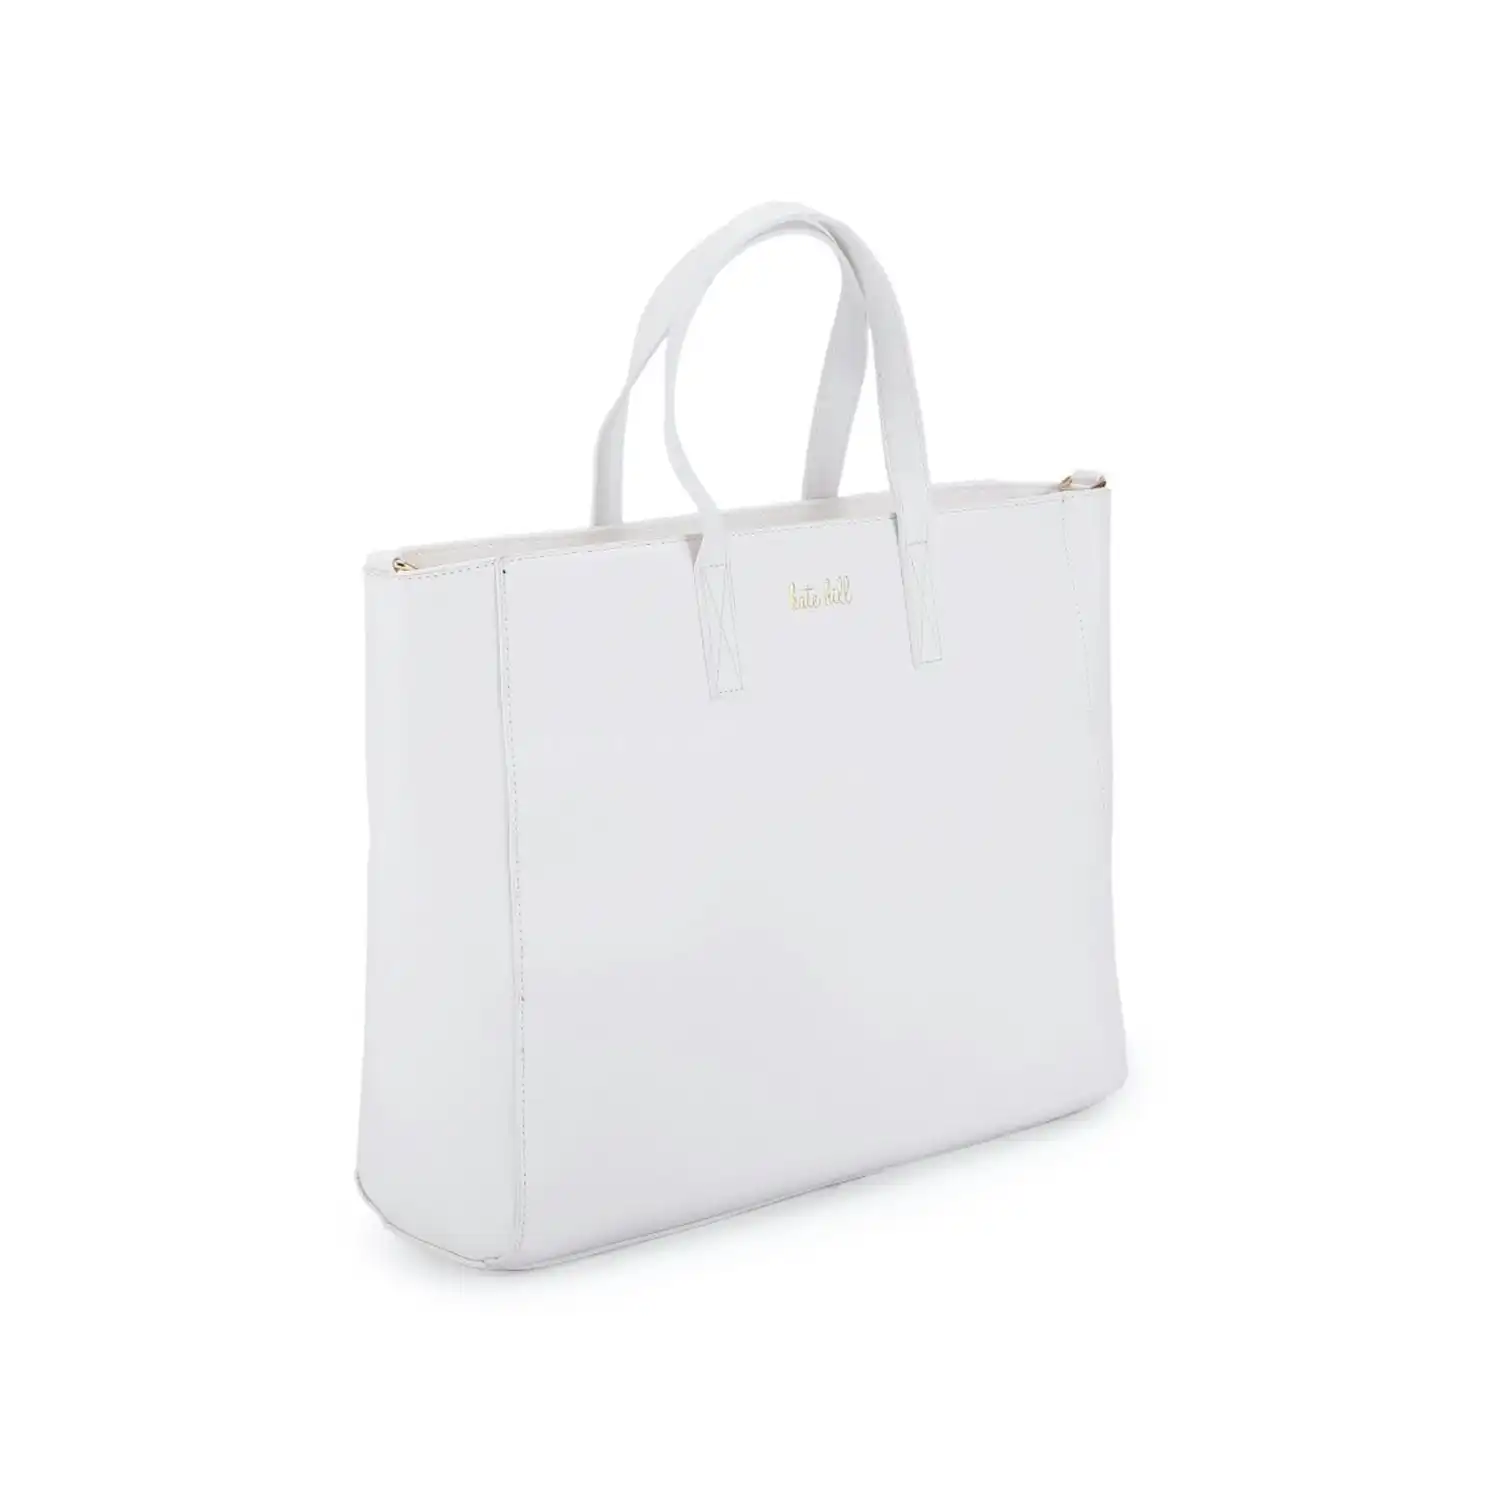 Kate Hill Bloom Travel Tote Bag w/ Attachable Shoulder Strap White 15.5L